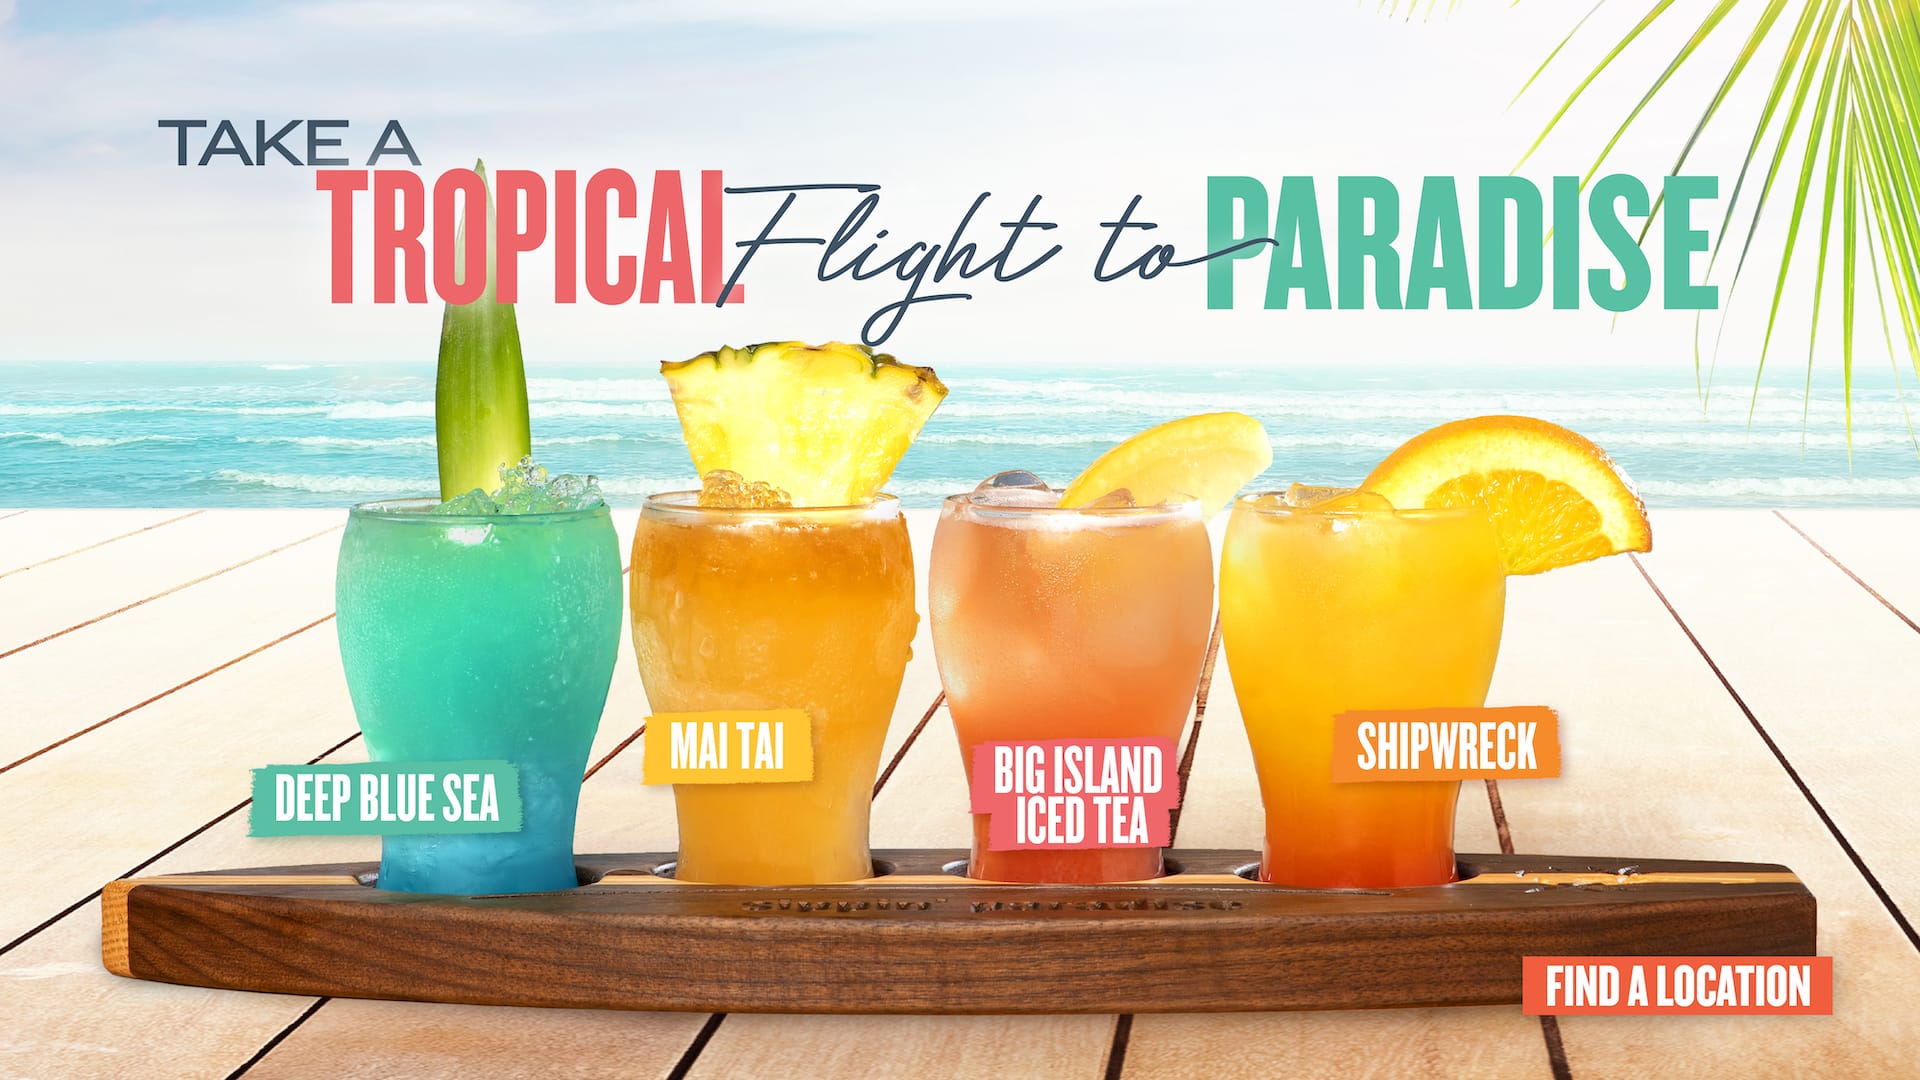 Take a Tropical Flight to Paradise - Deep Blue Sea - Mai Tai - Big Island Iced Tea - Shipwreck